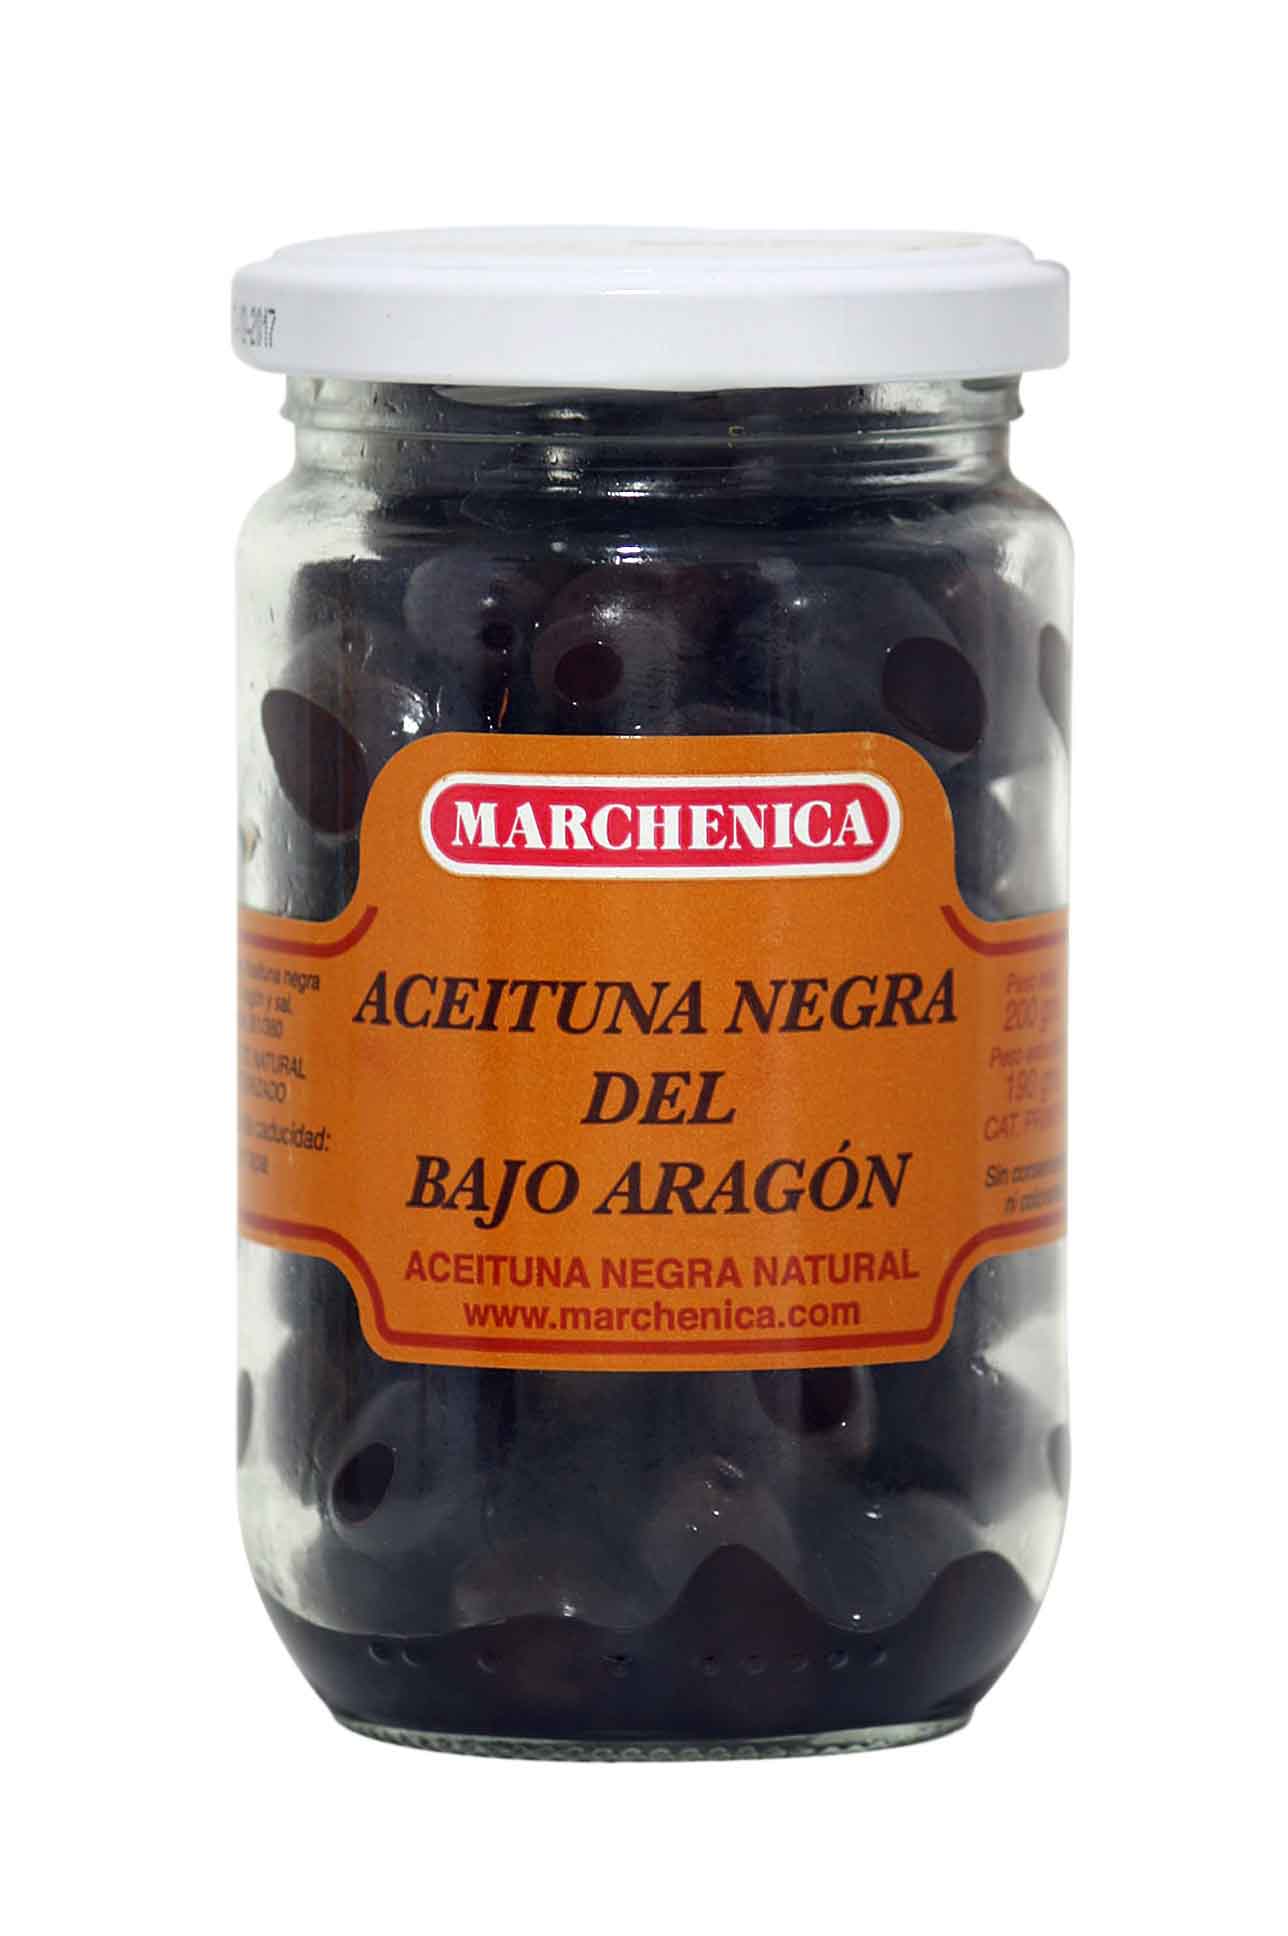 Balck aragon olive